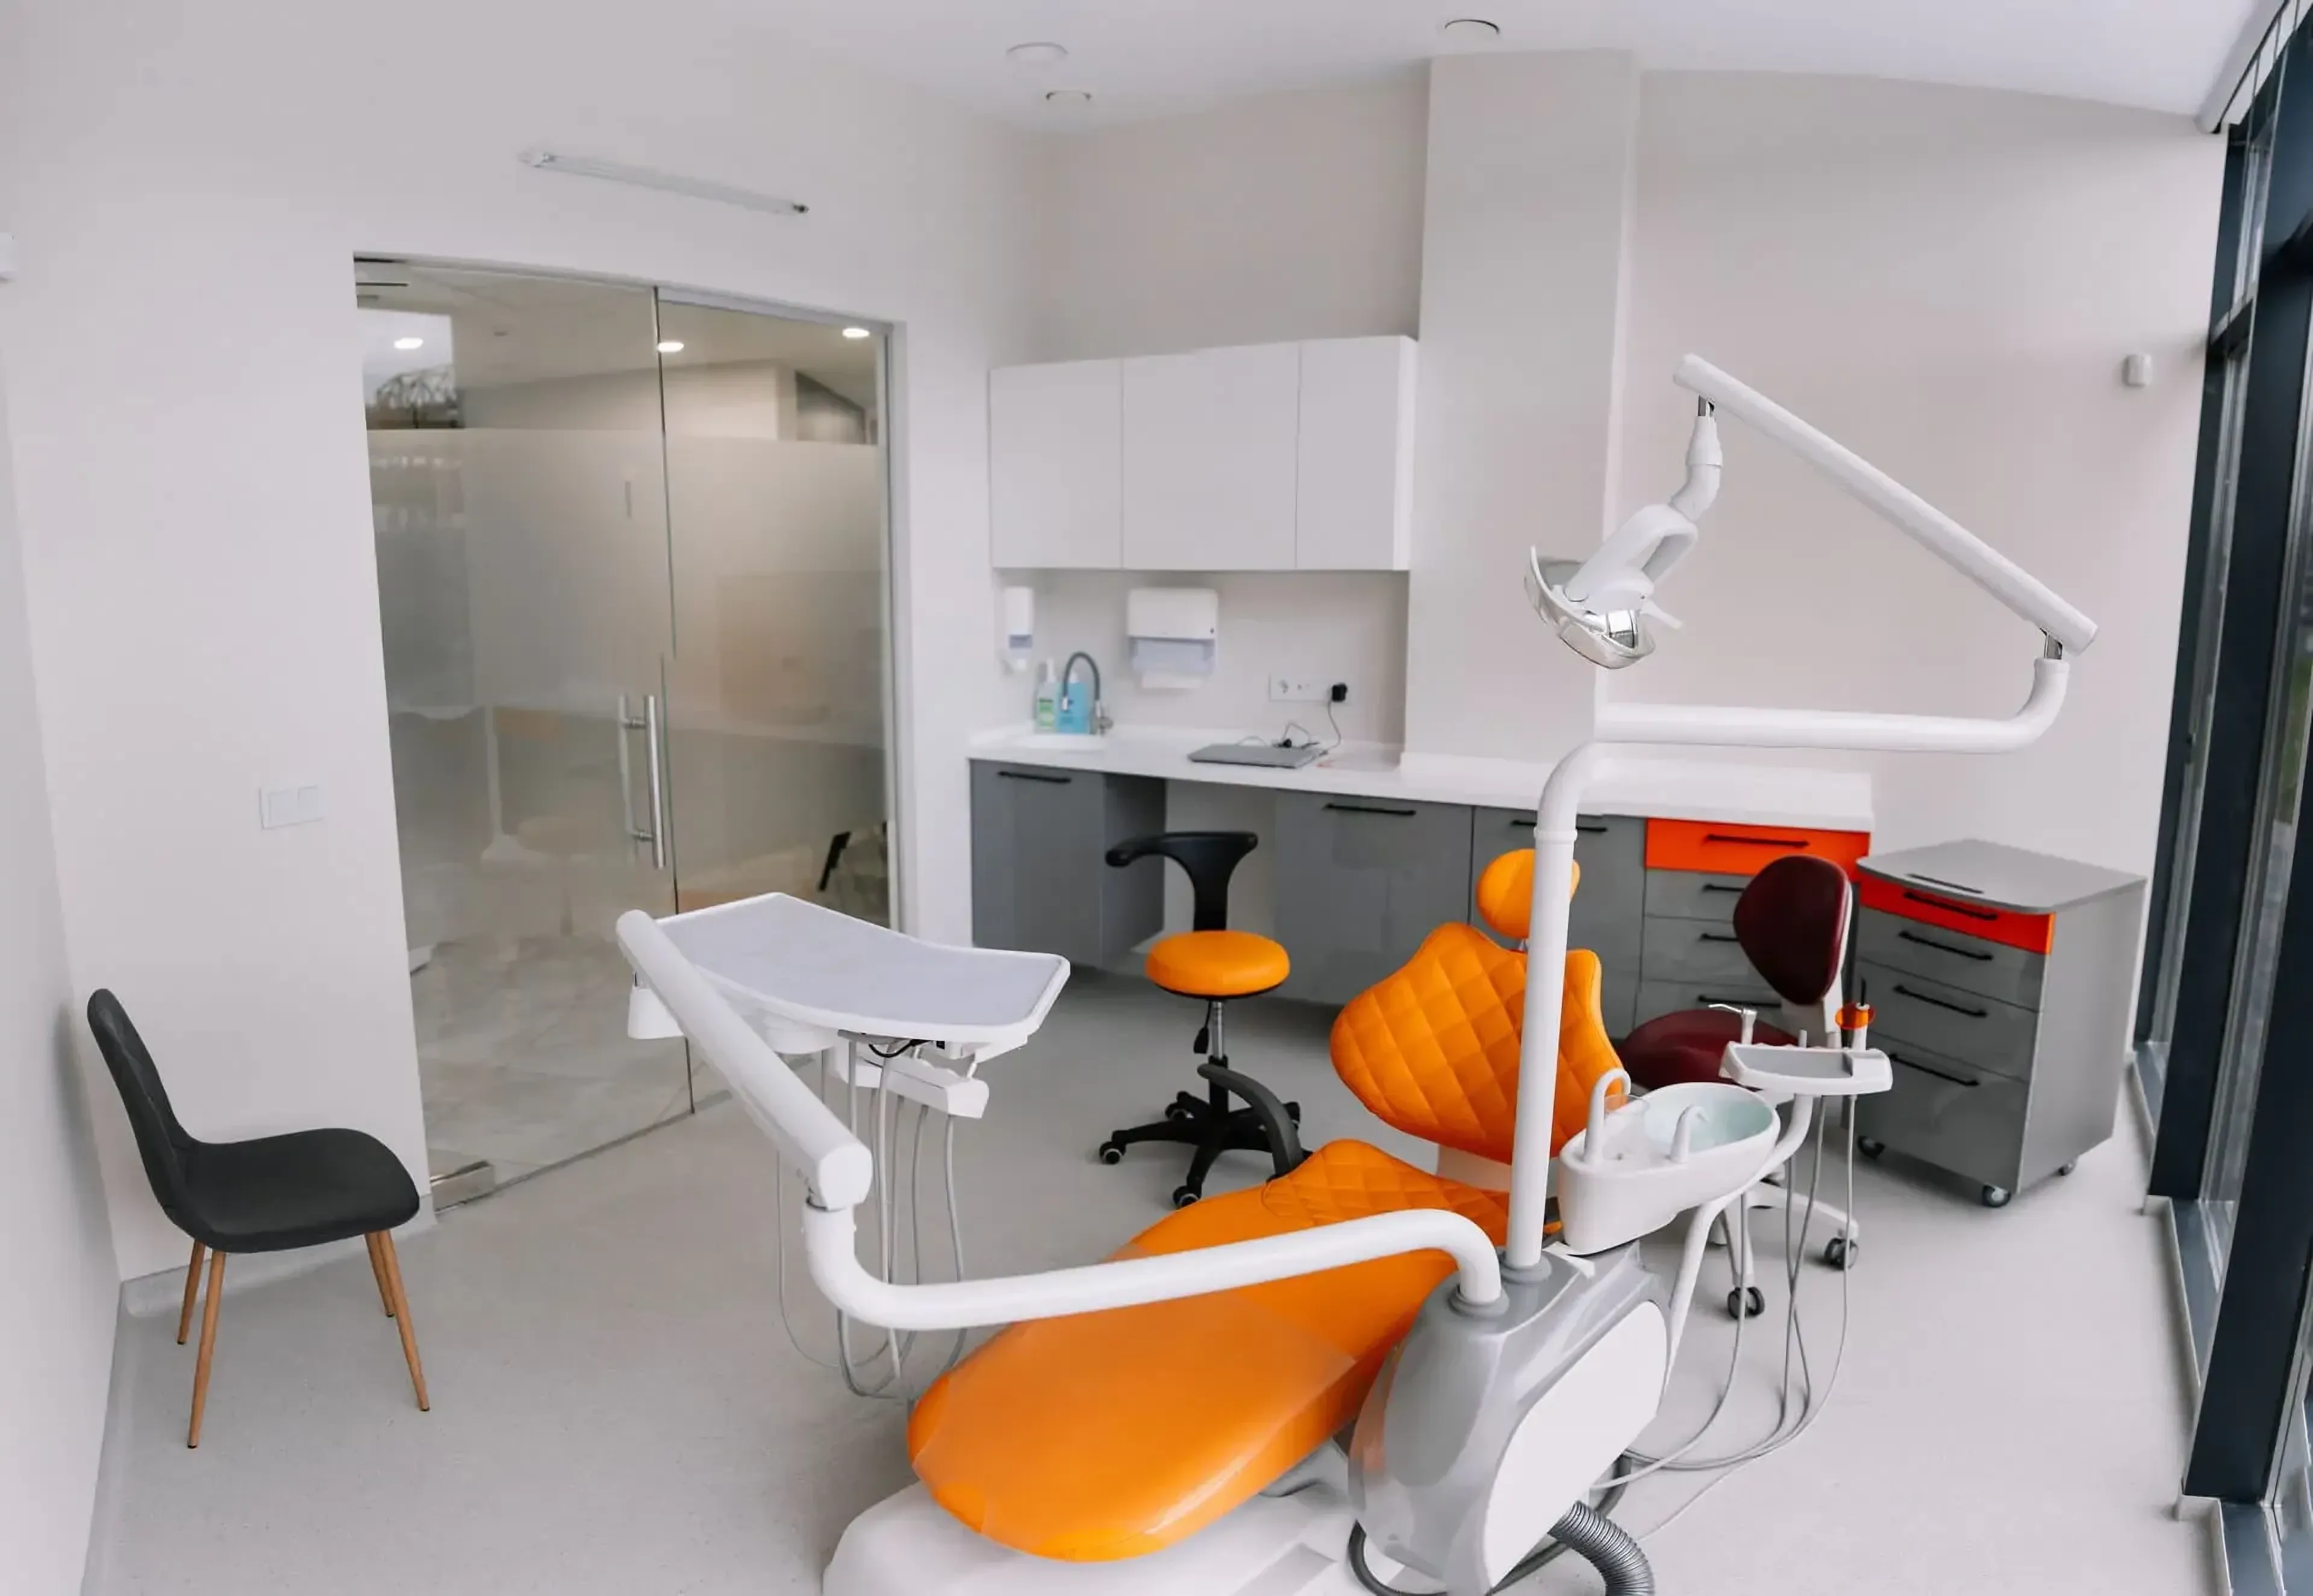 Dentist's office in My Dentistry clinic in Lviv Ukraine